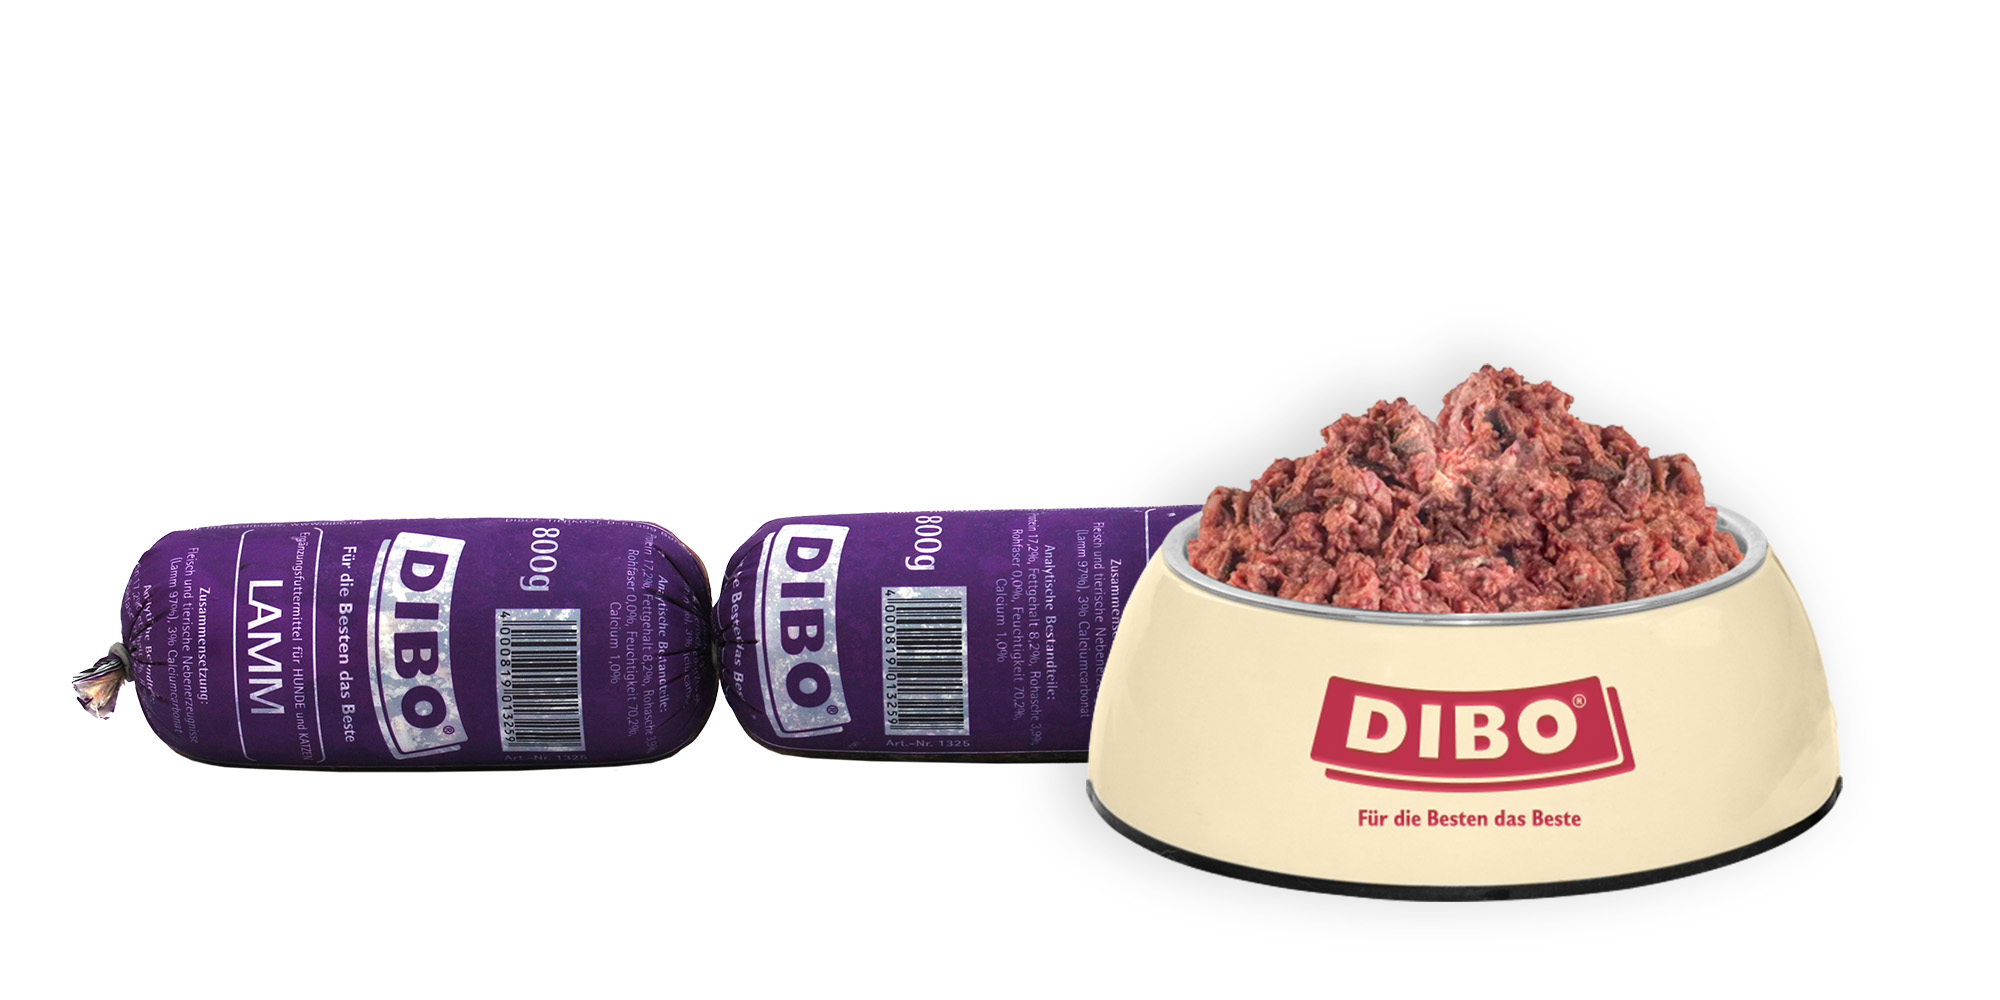 DIBO Tiefkühlwurst Lamm - B.A.R.F.-Frostfutter für Hunde - 8 x 800g